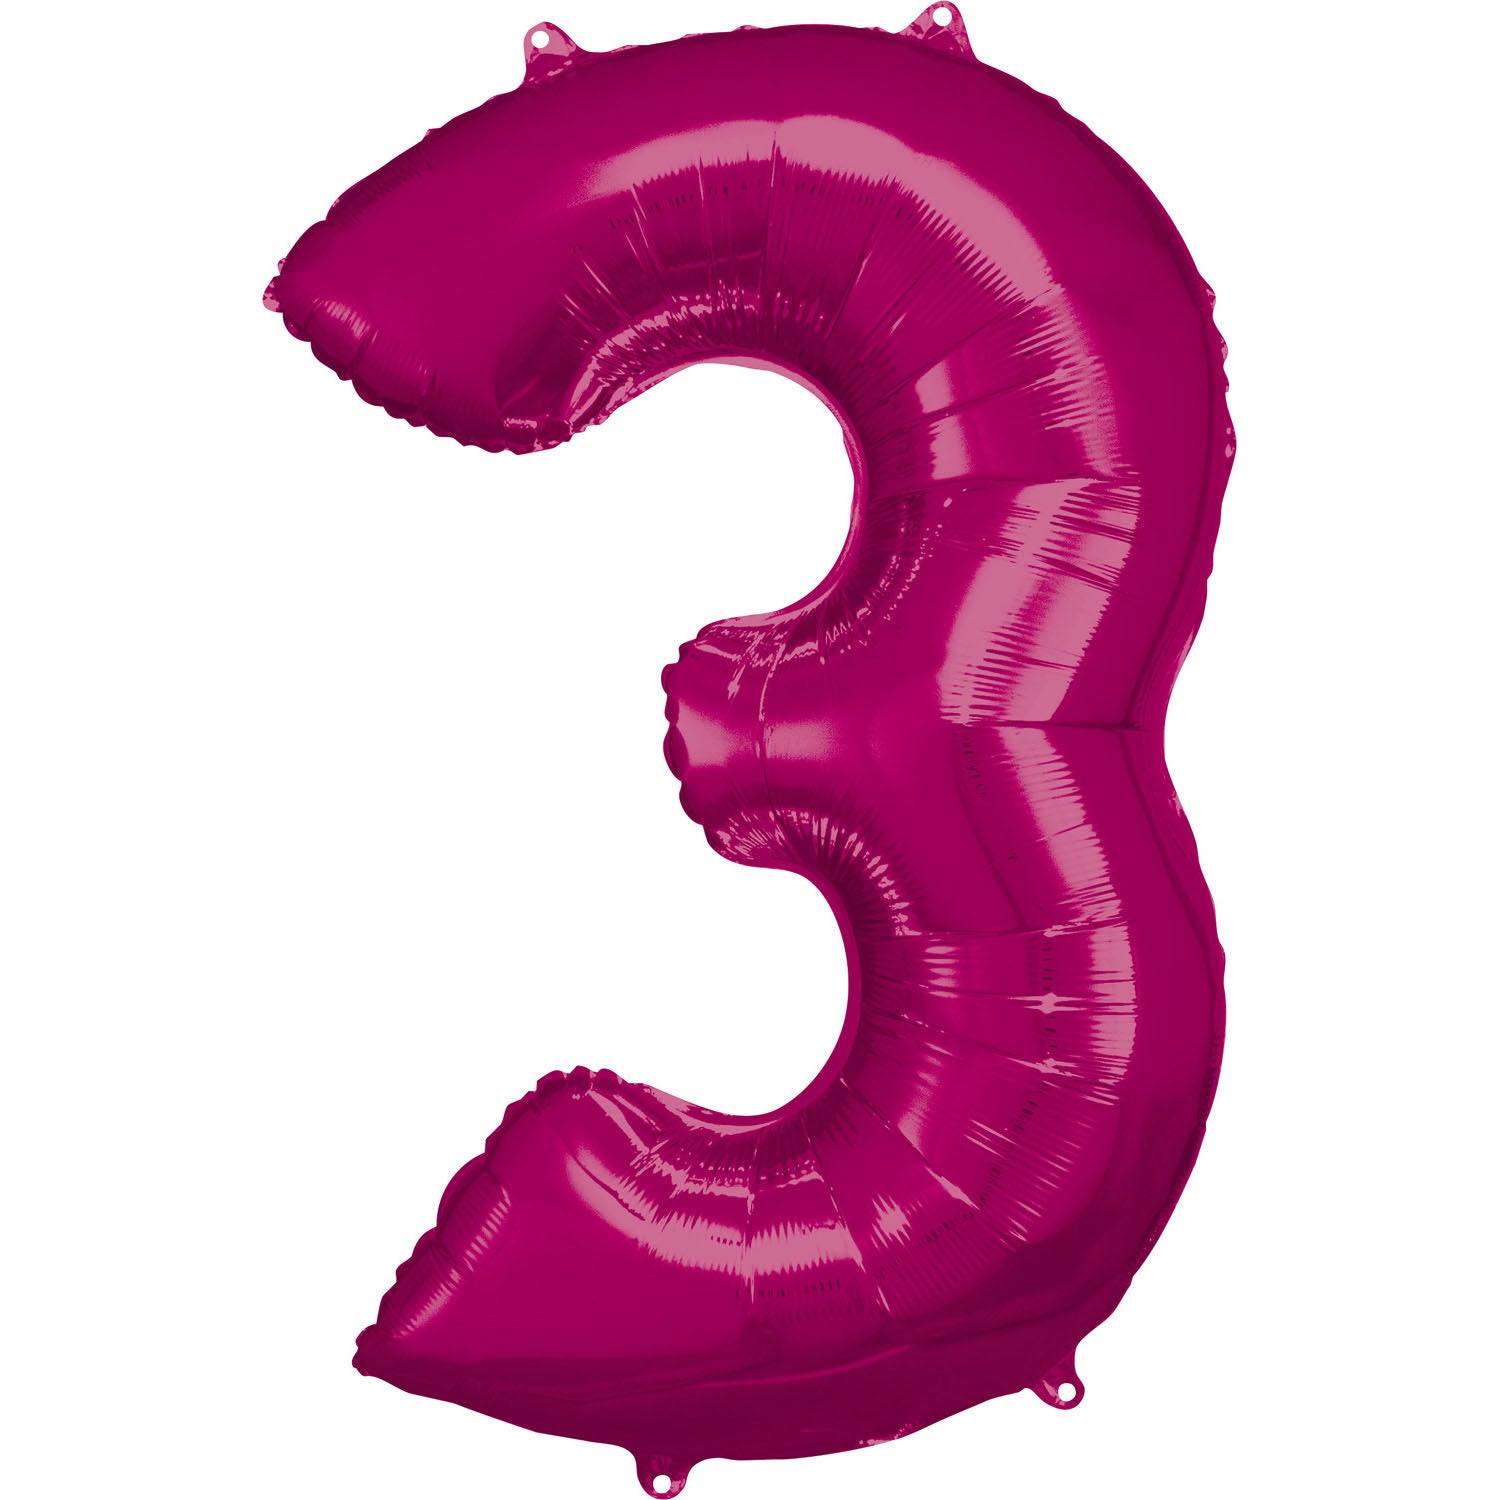 Pink foiled helium balloon figures 86 cm